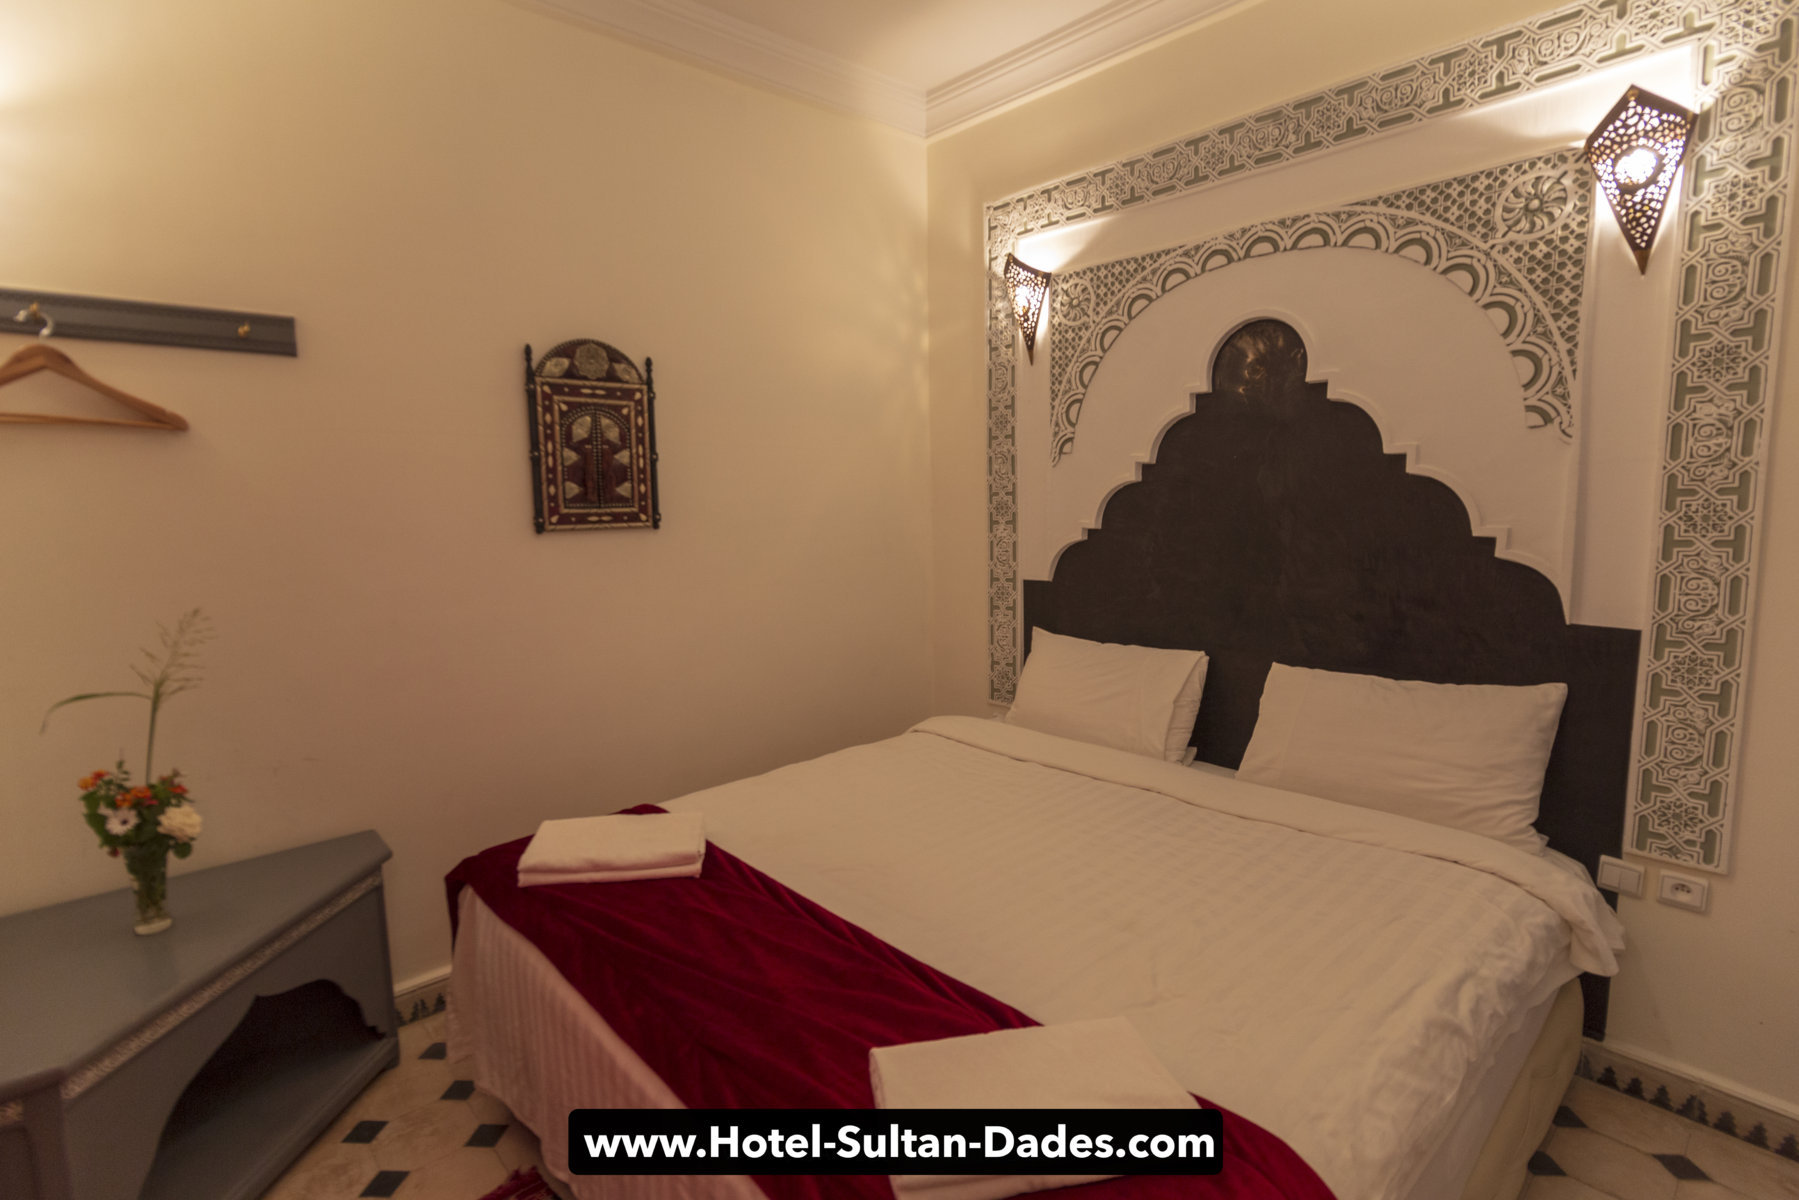 Hotel Sultan Dades Rooms